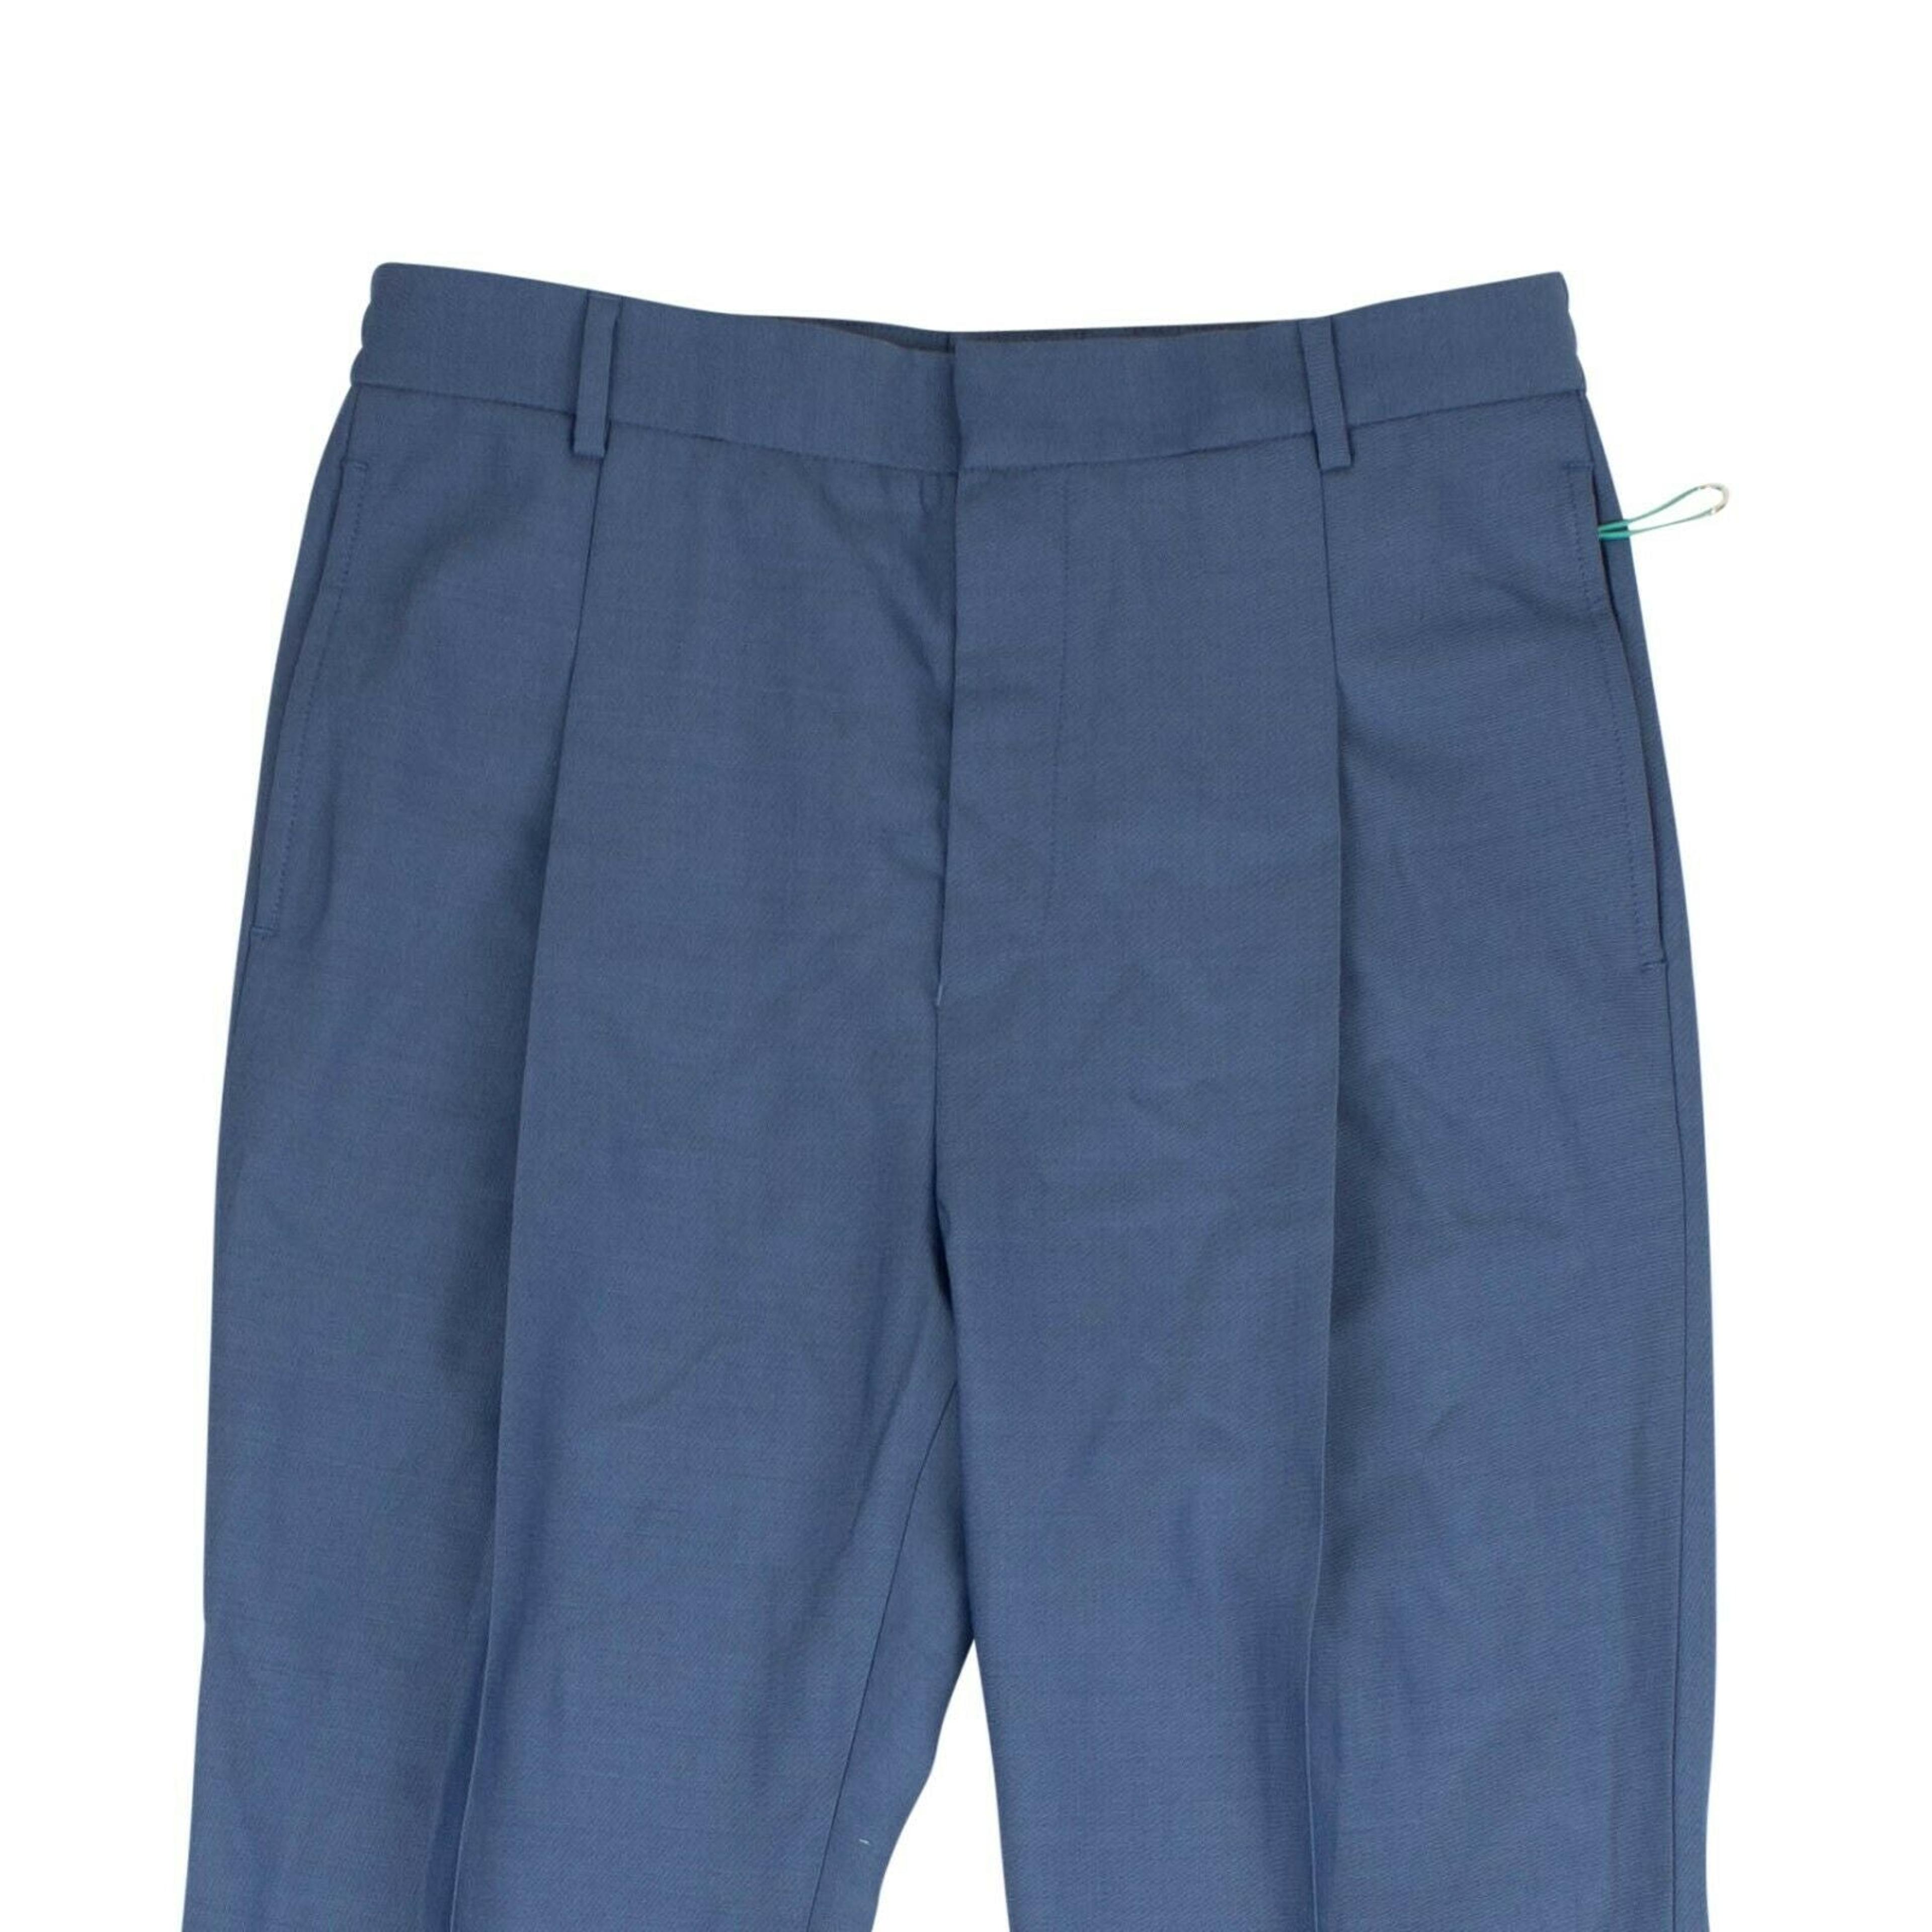 Alternate View 2 of Men's Blue Pleated Pants